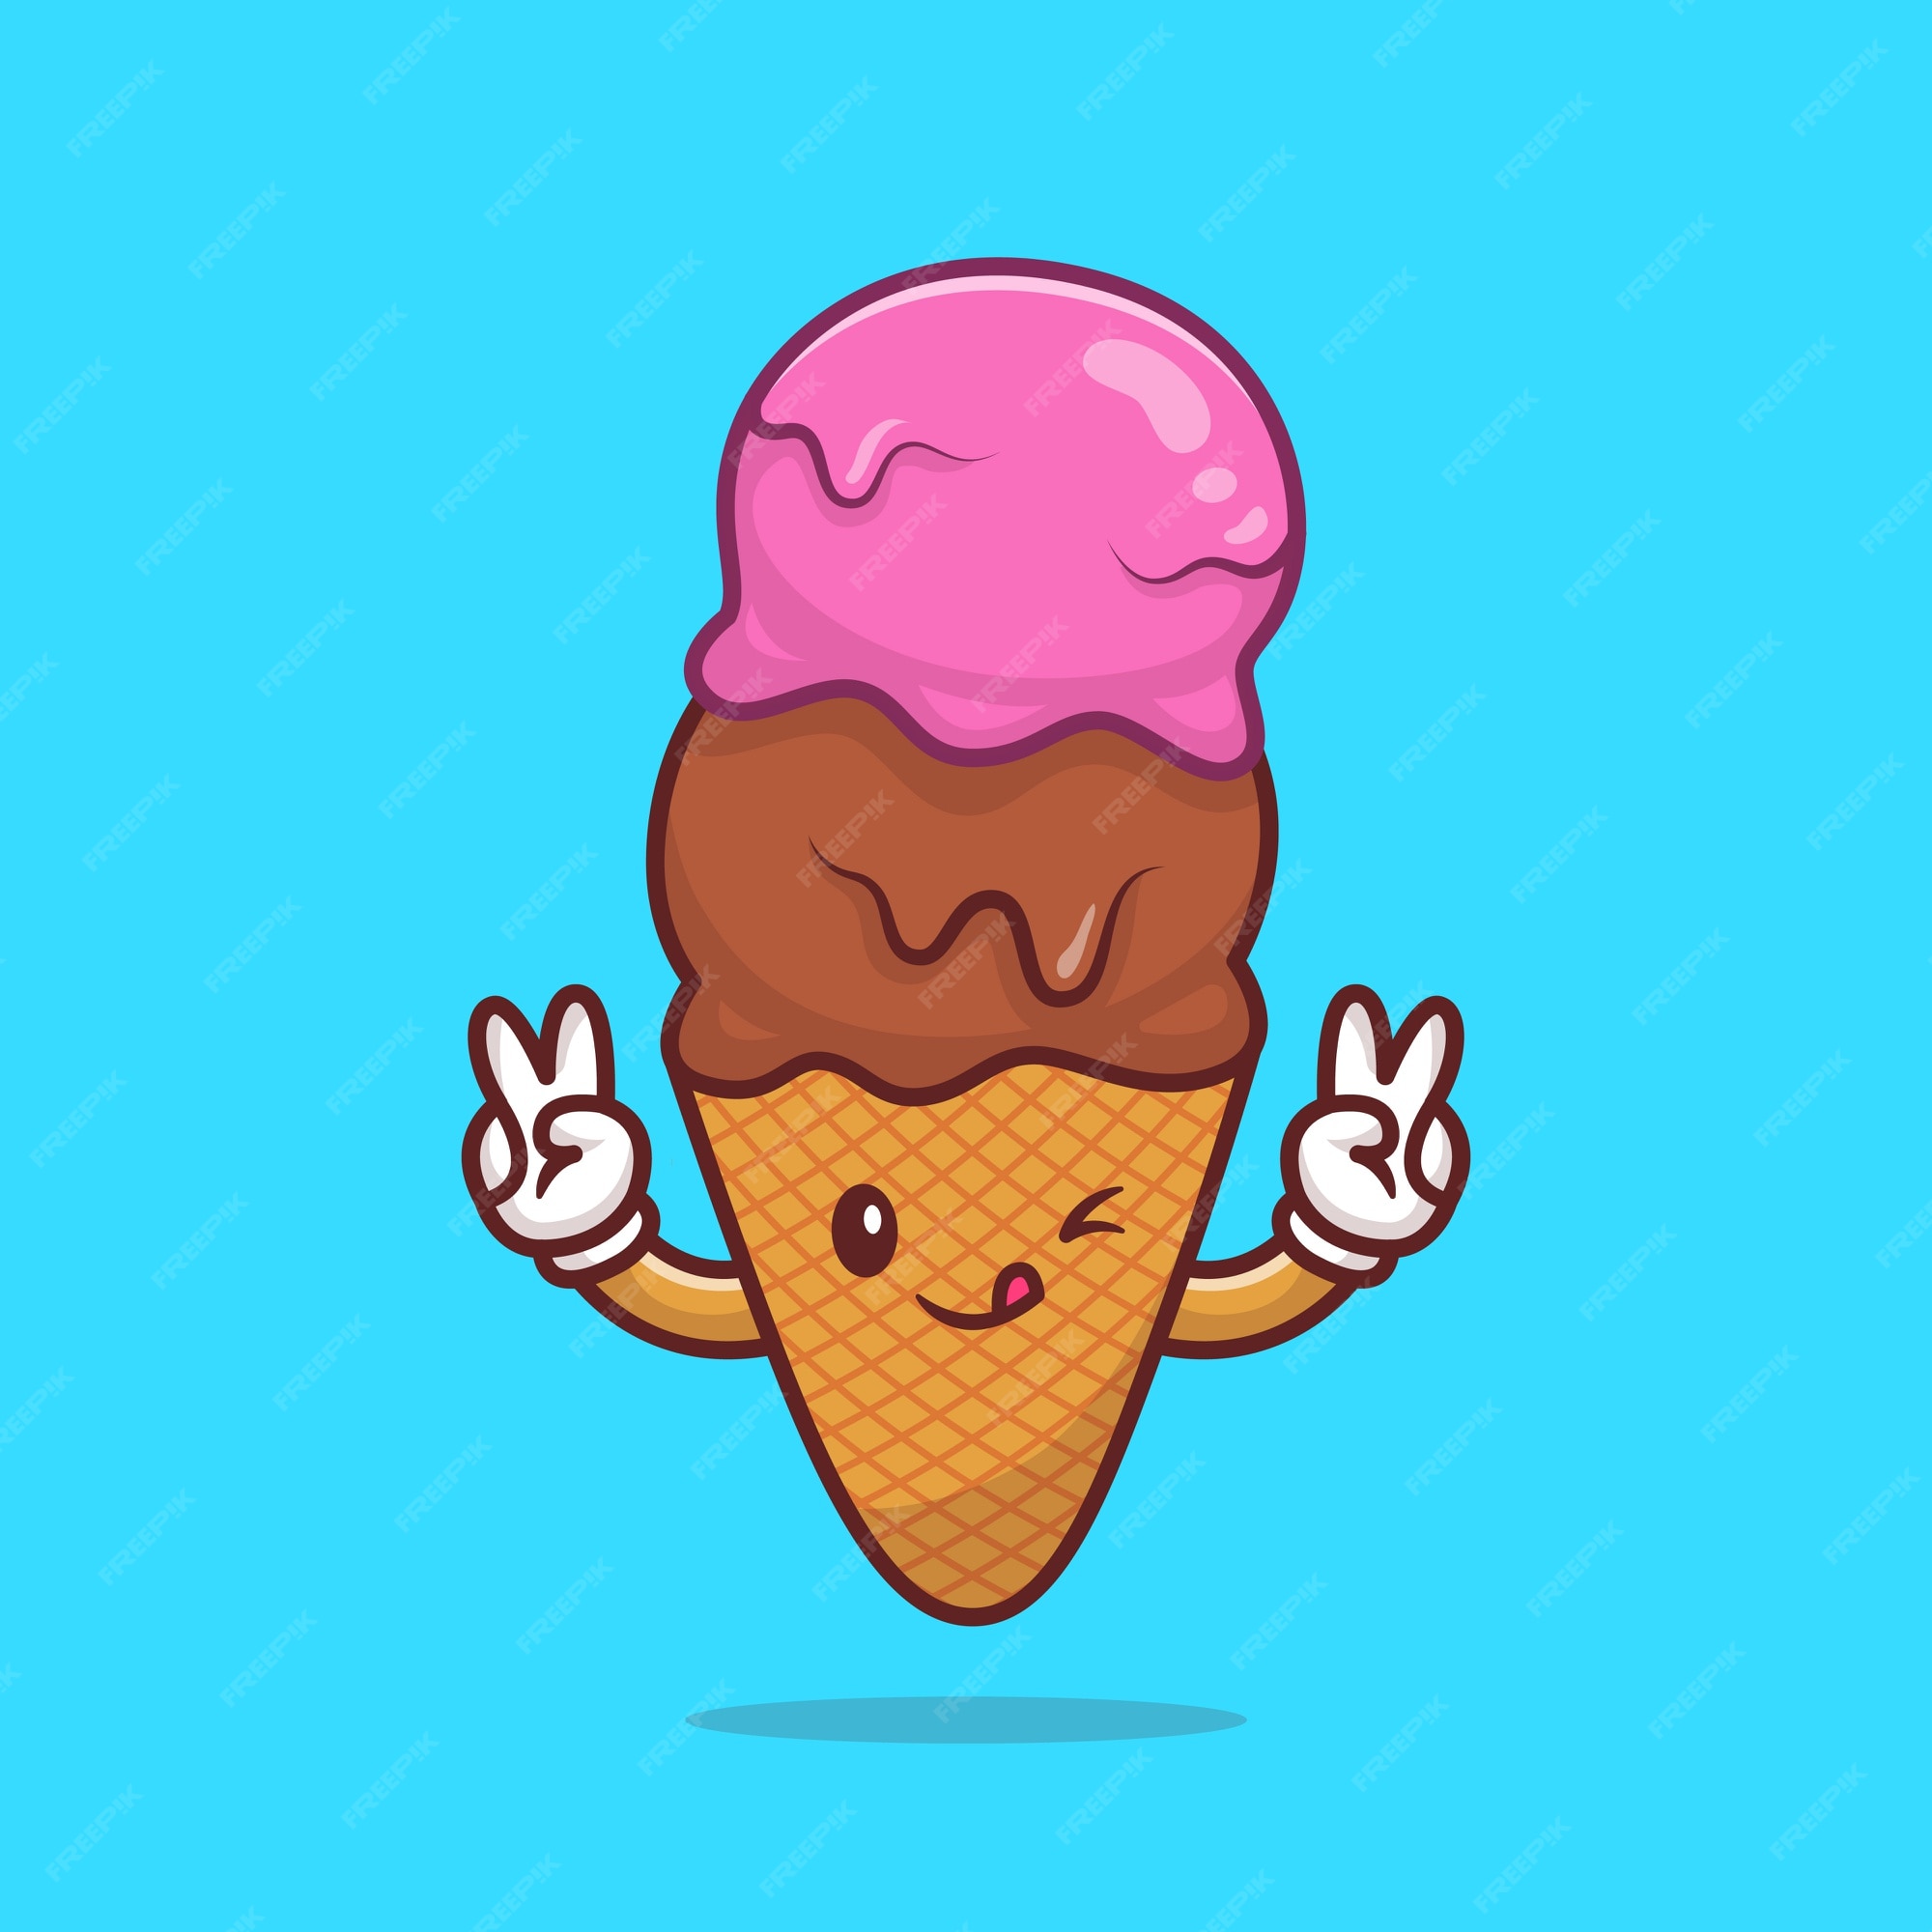 Ice Cream Cartoon Images - Free Download on Freepik